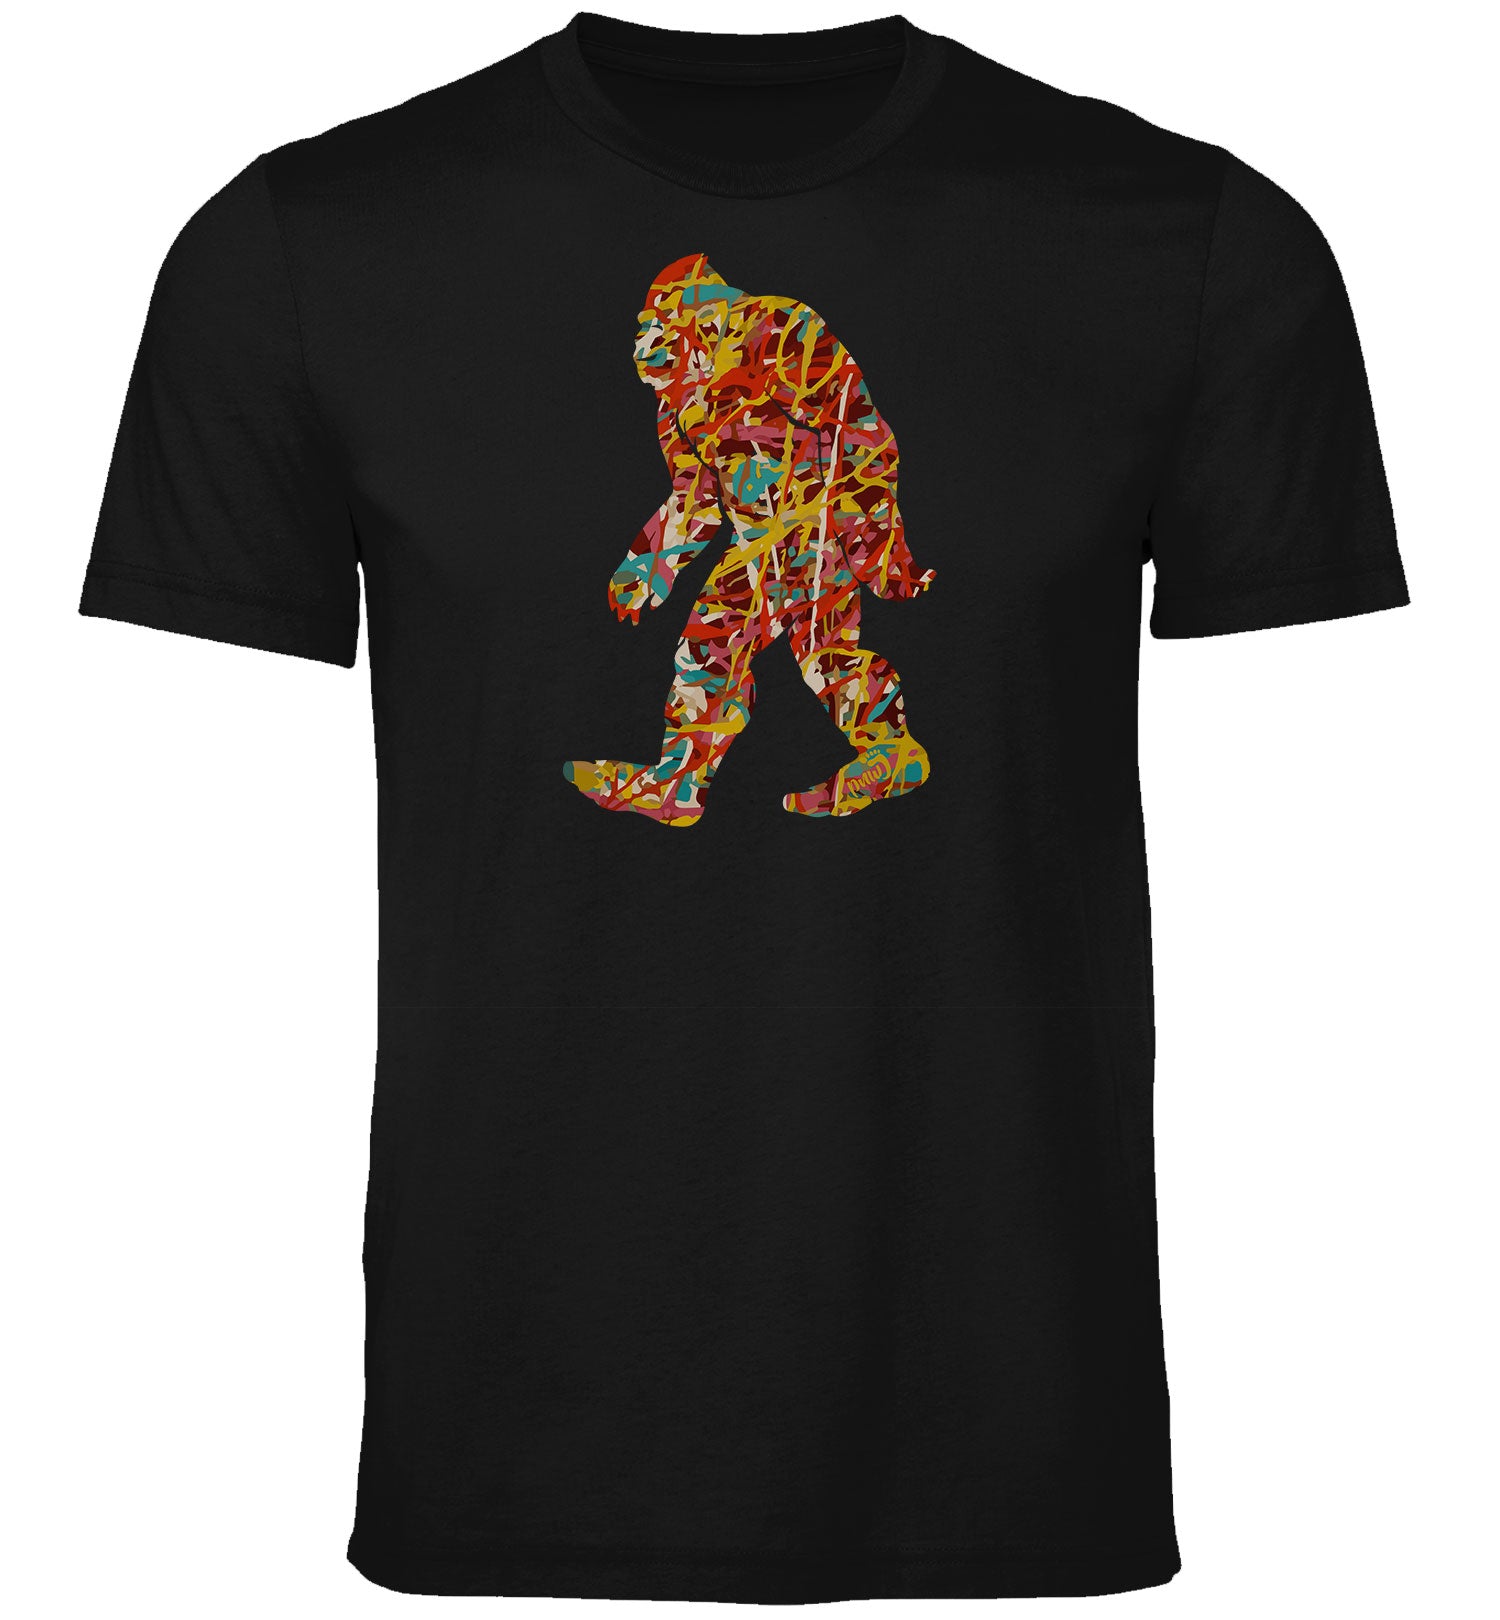 Bigfoot Shirt - Pollock Style - Short Sleeve - Front - Black